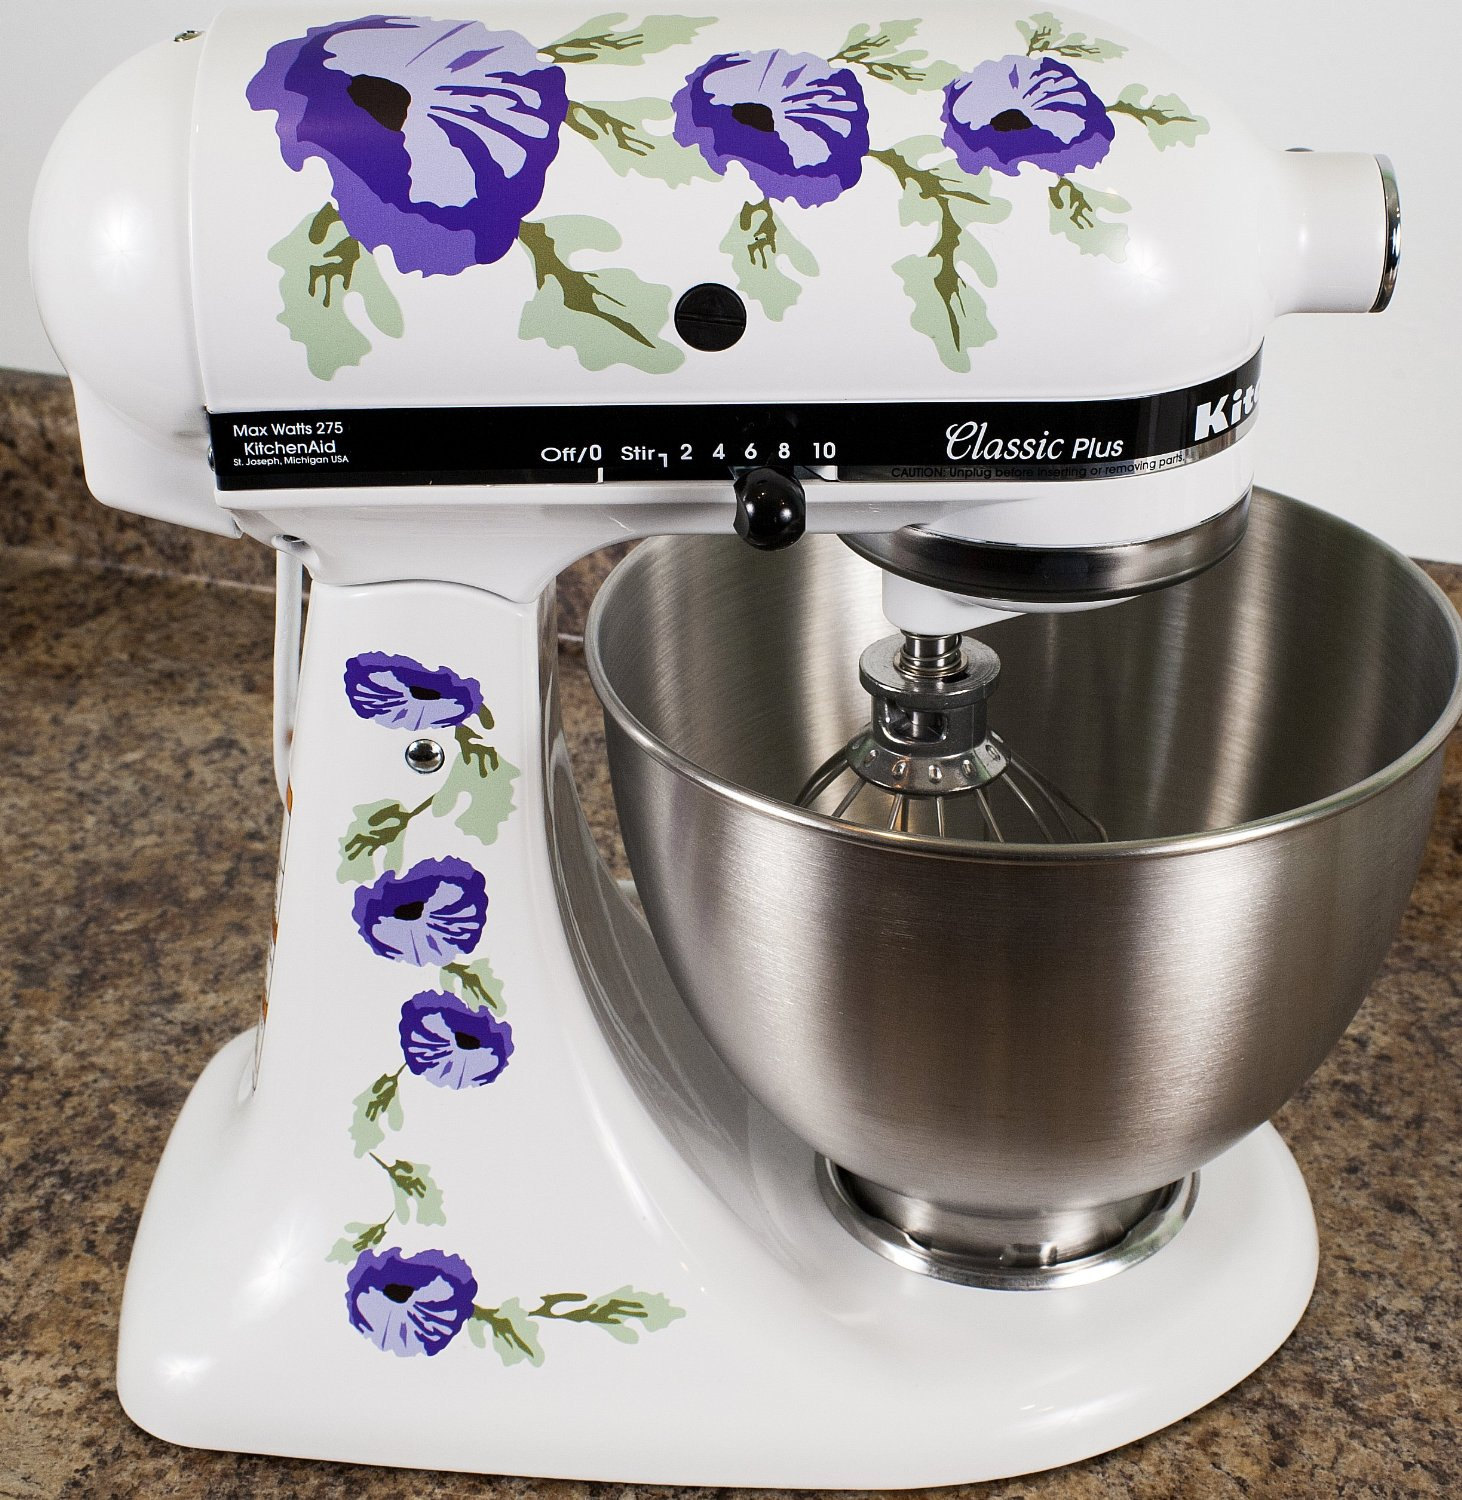 Kitchenaid Mixer Decals Medallion Flowers to Decorate an Appliance